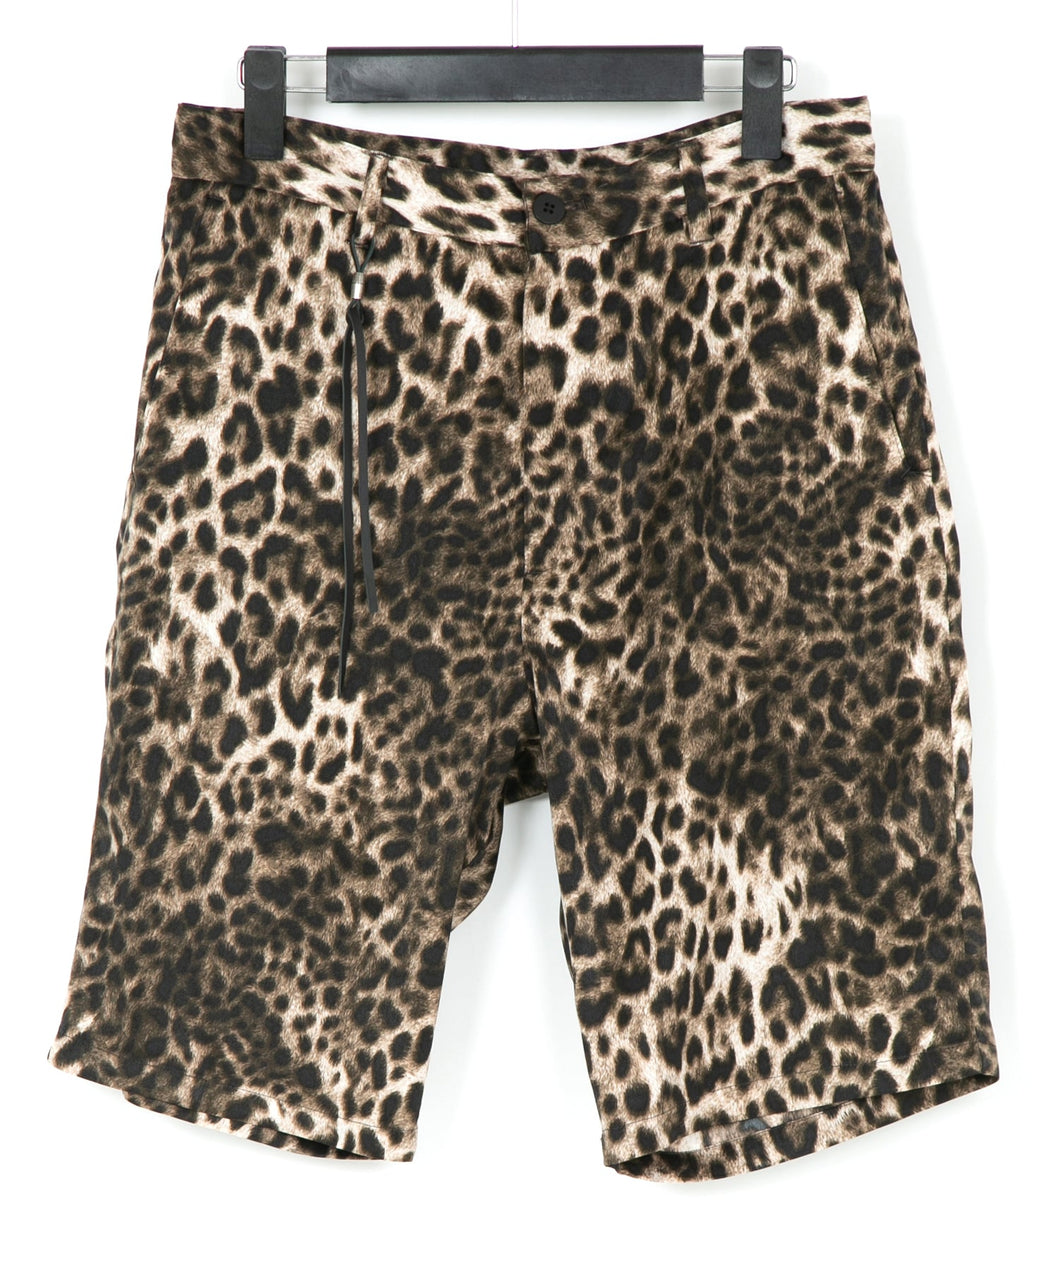 Leopard Printed Satin Shorts - LEOPARD